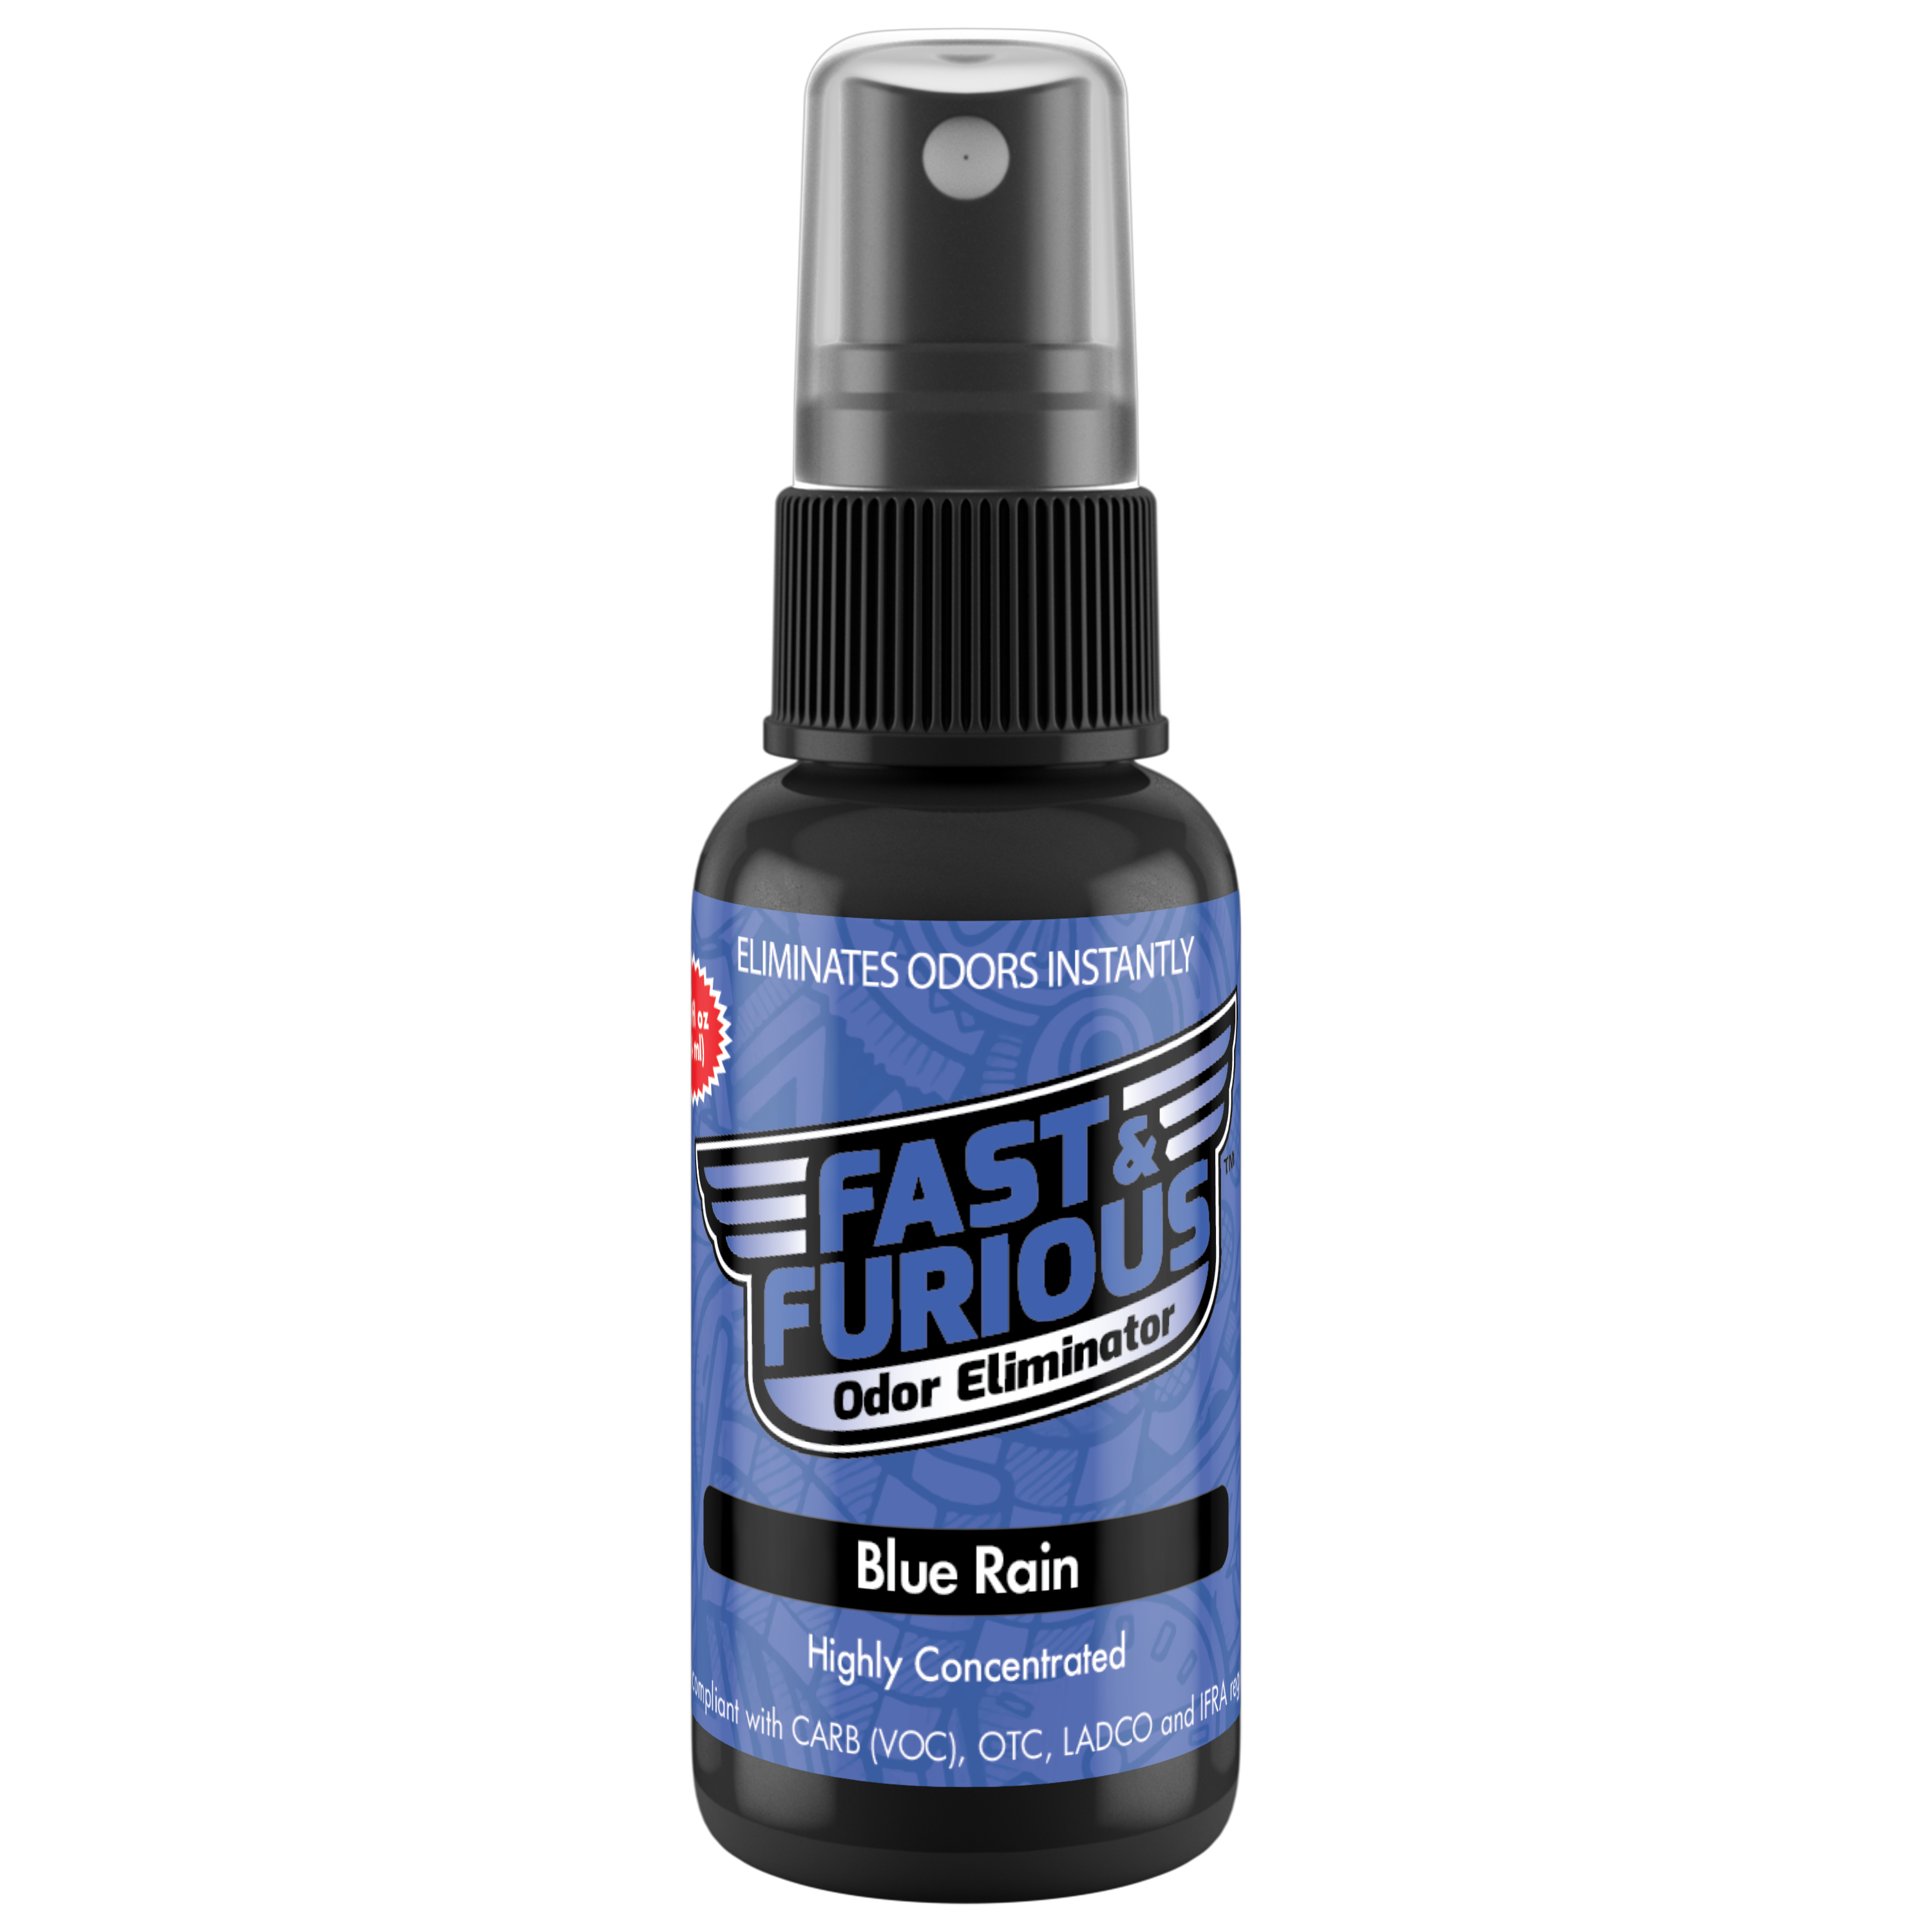 Fast and Furious Odor Eliminator - Blue Rain Scent